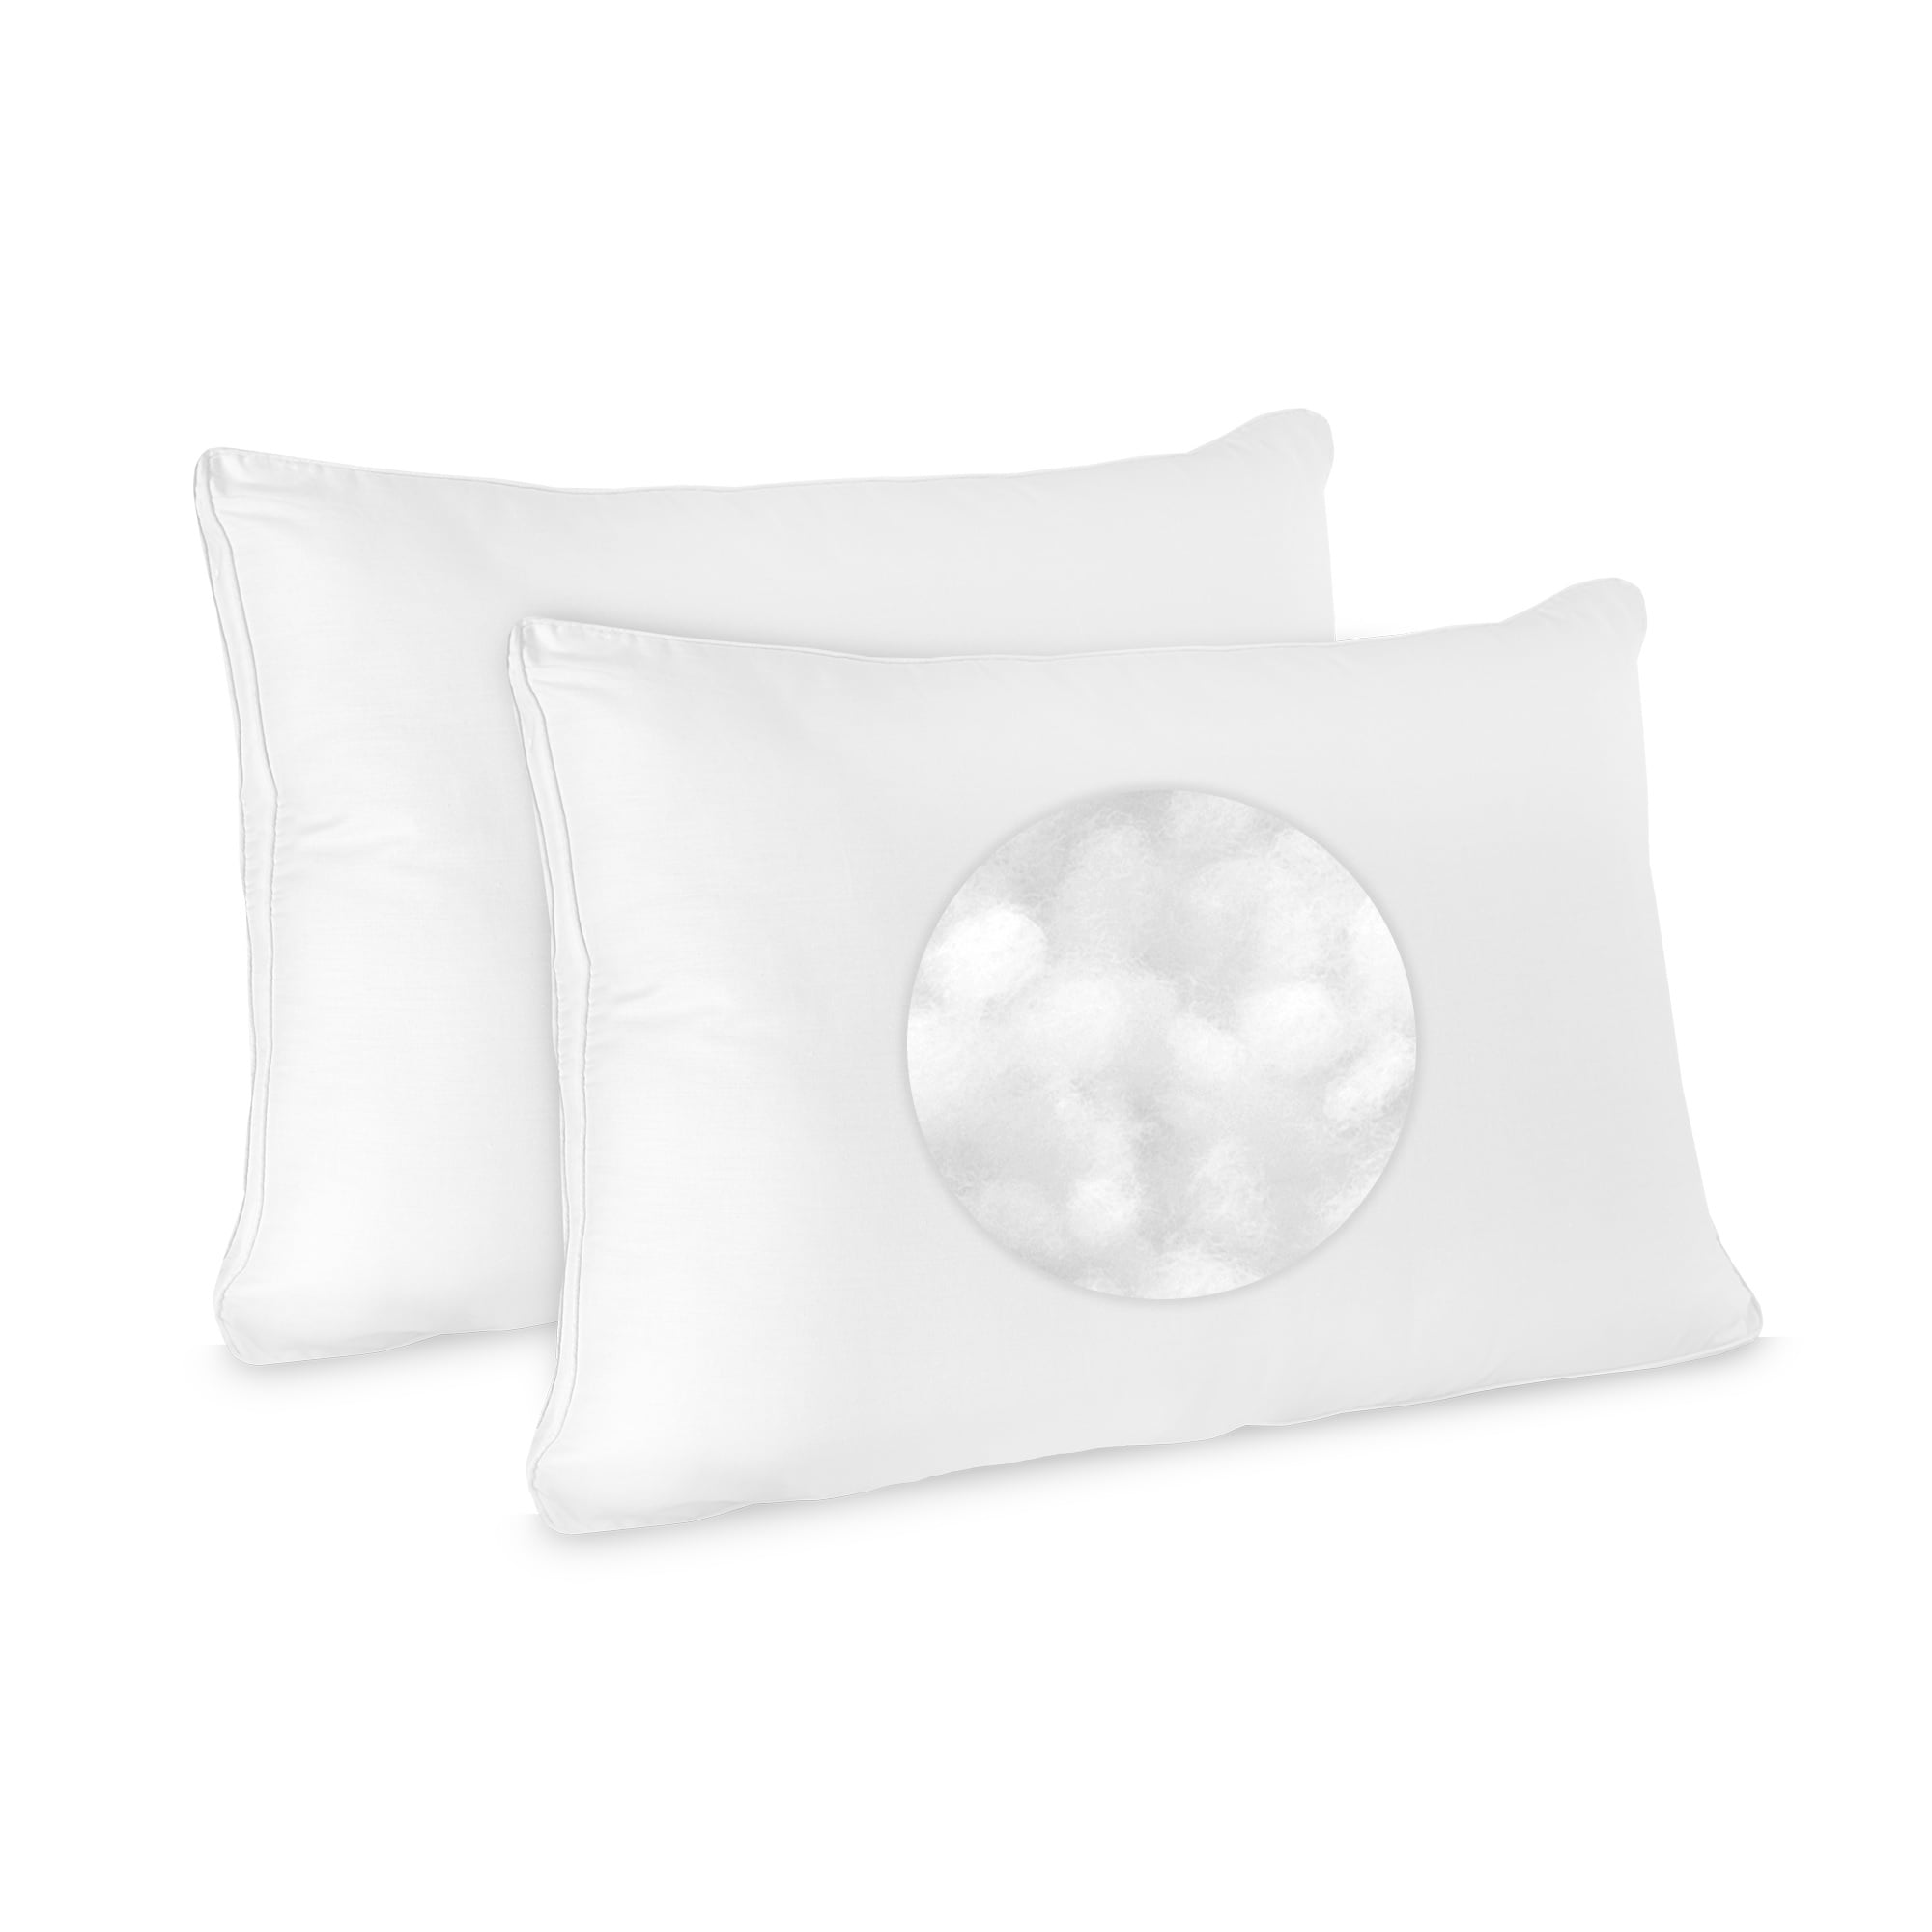 jml coolmax pillow